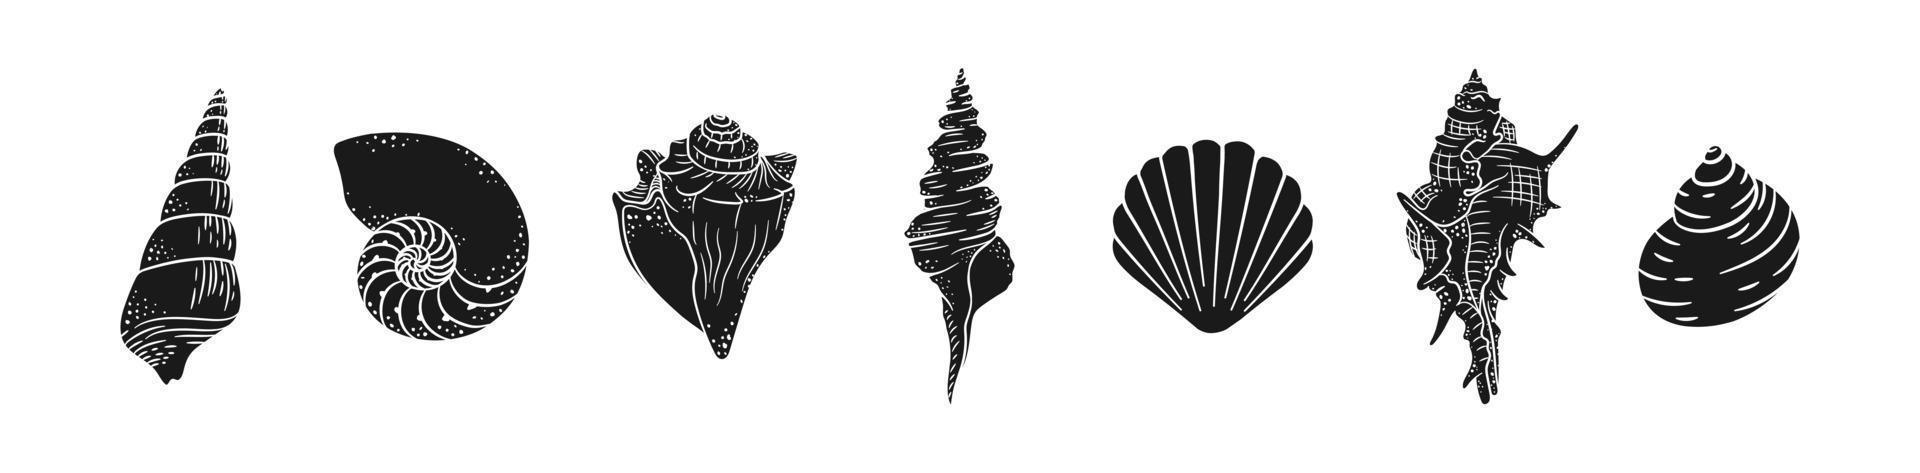 Seashell silhouette vector illustration set. Aquatic marine graphics for menu, seafood restaurant design, resort hotel spa, surf boards, wall art print